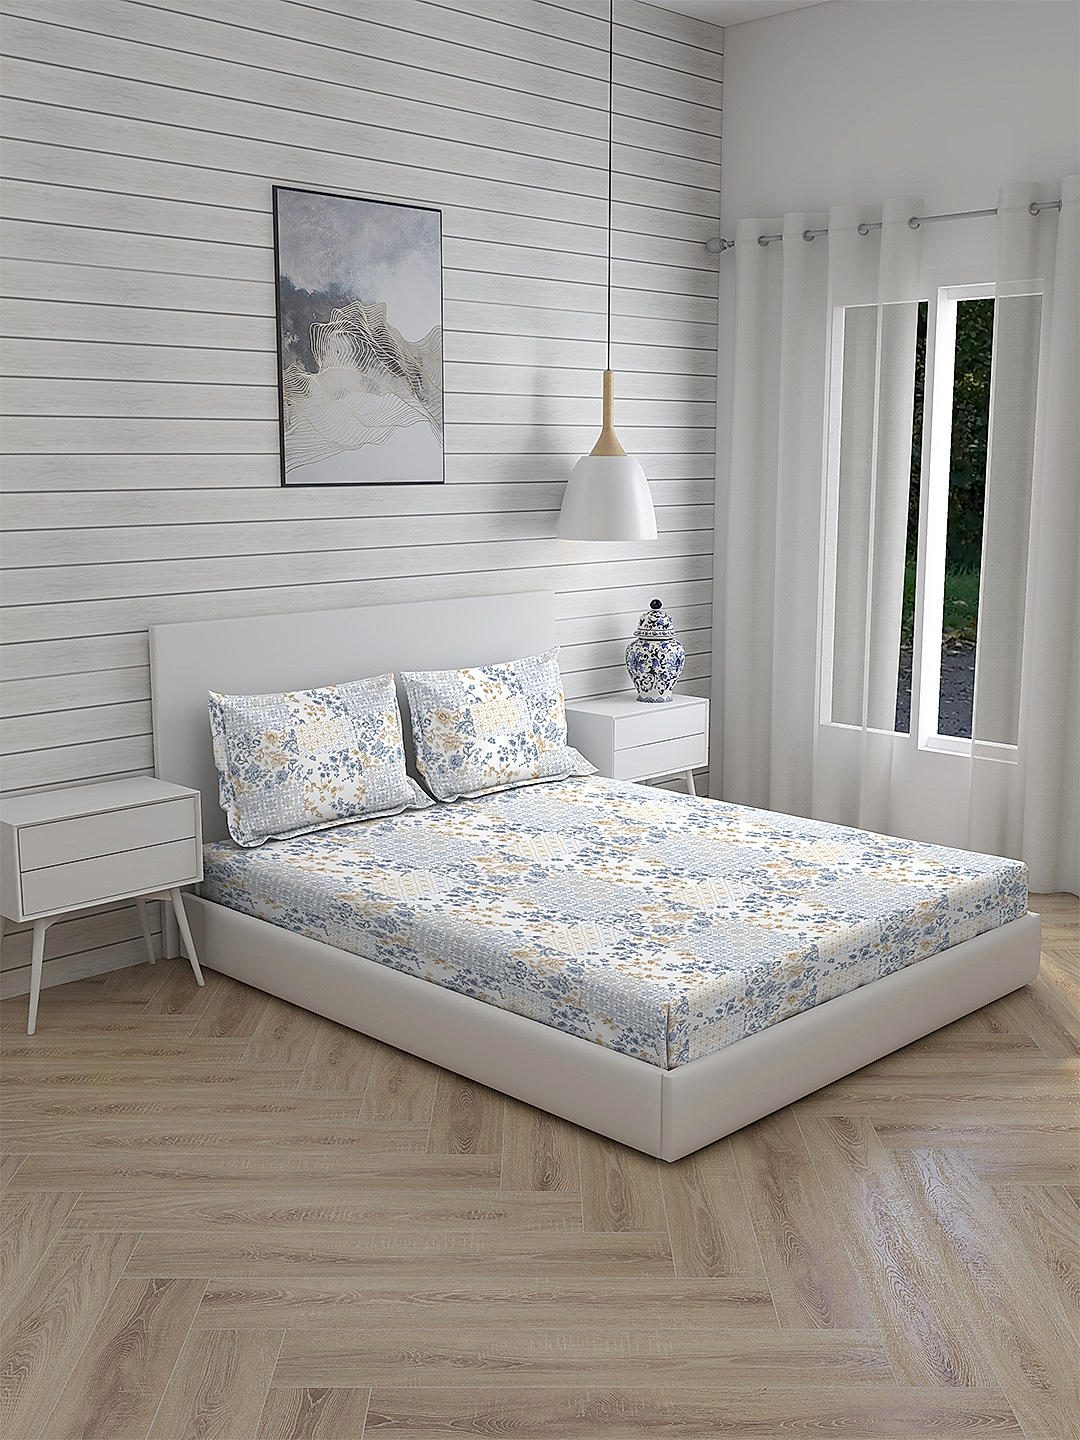 Cottage Garden-2 300 TC 100% cotton Ultra Fine White/Blue Colored Floral Print King Bed Sheet Set